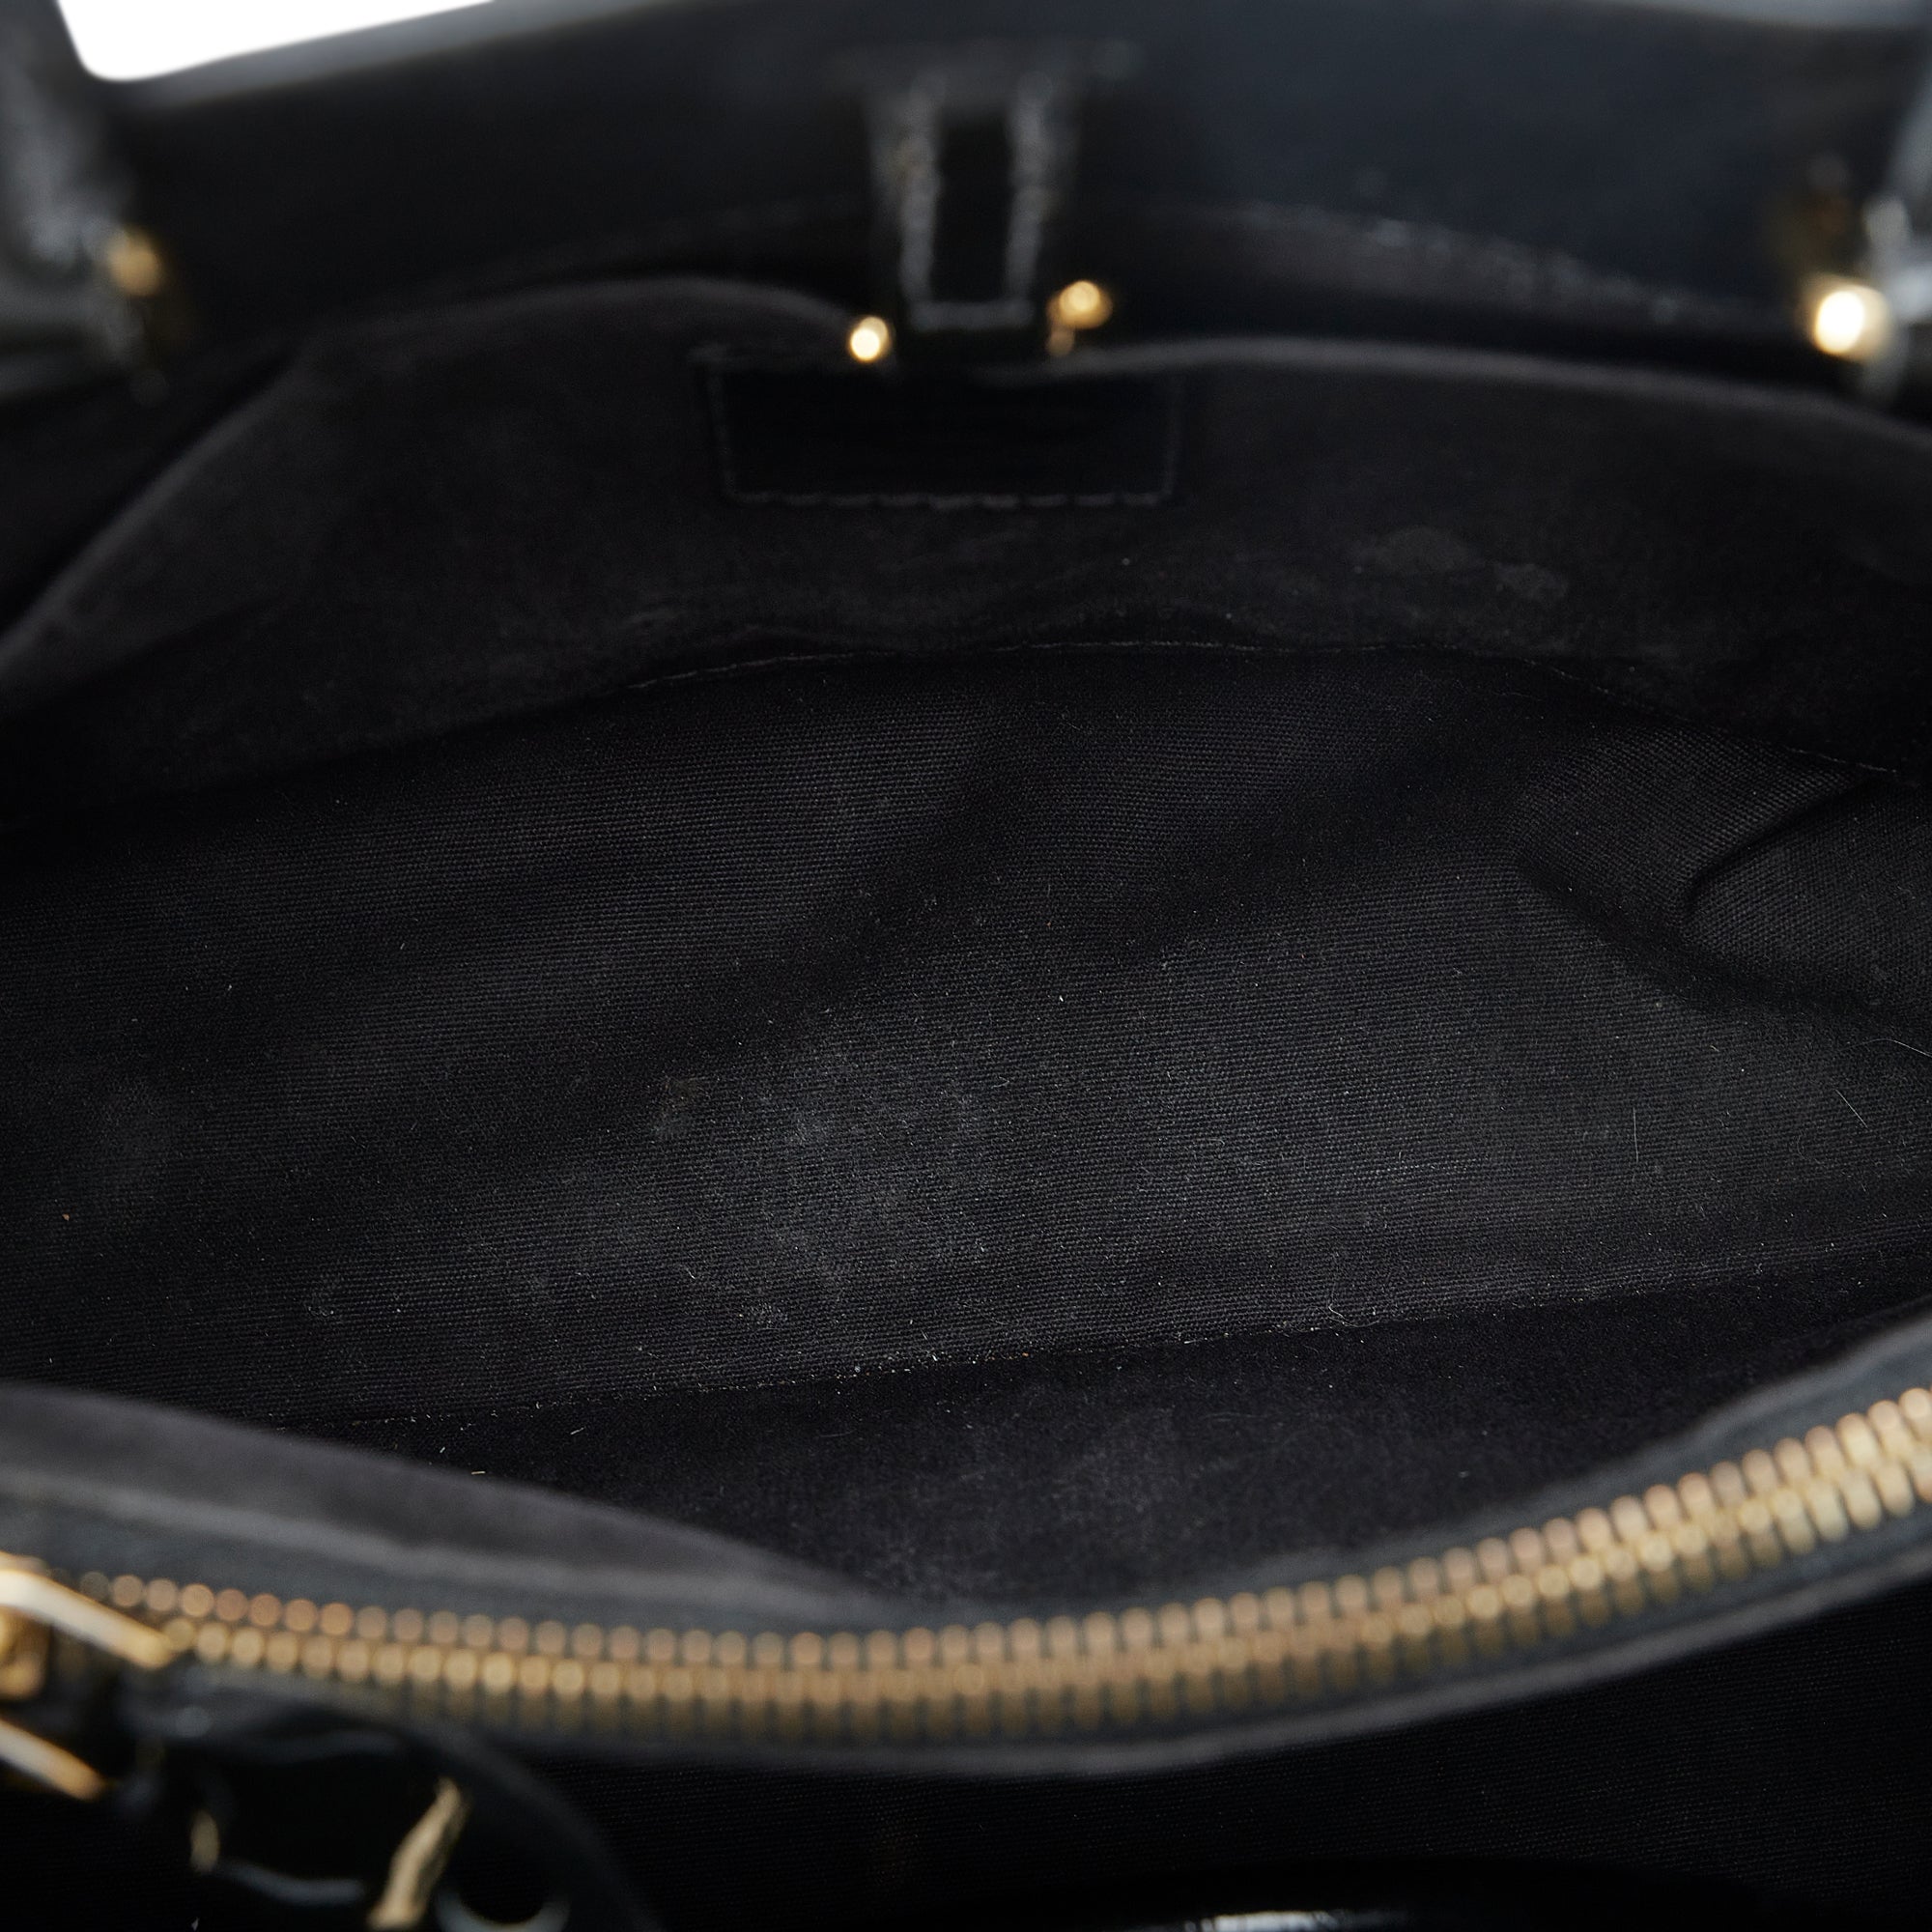 Montaigne BB Vernis – Keeks Designer Handbags